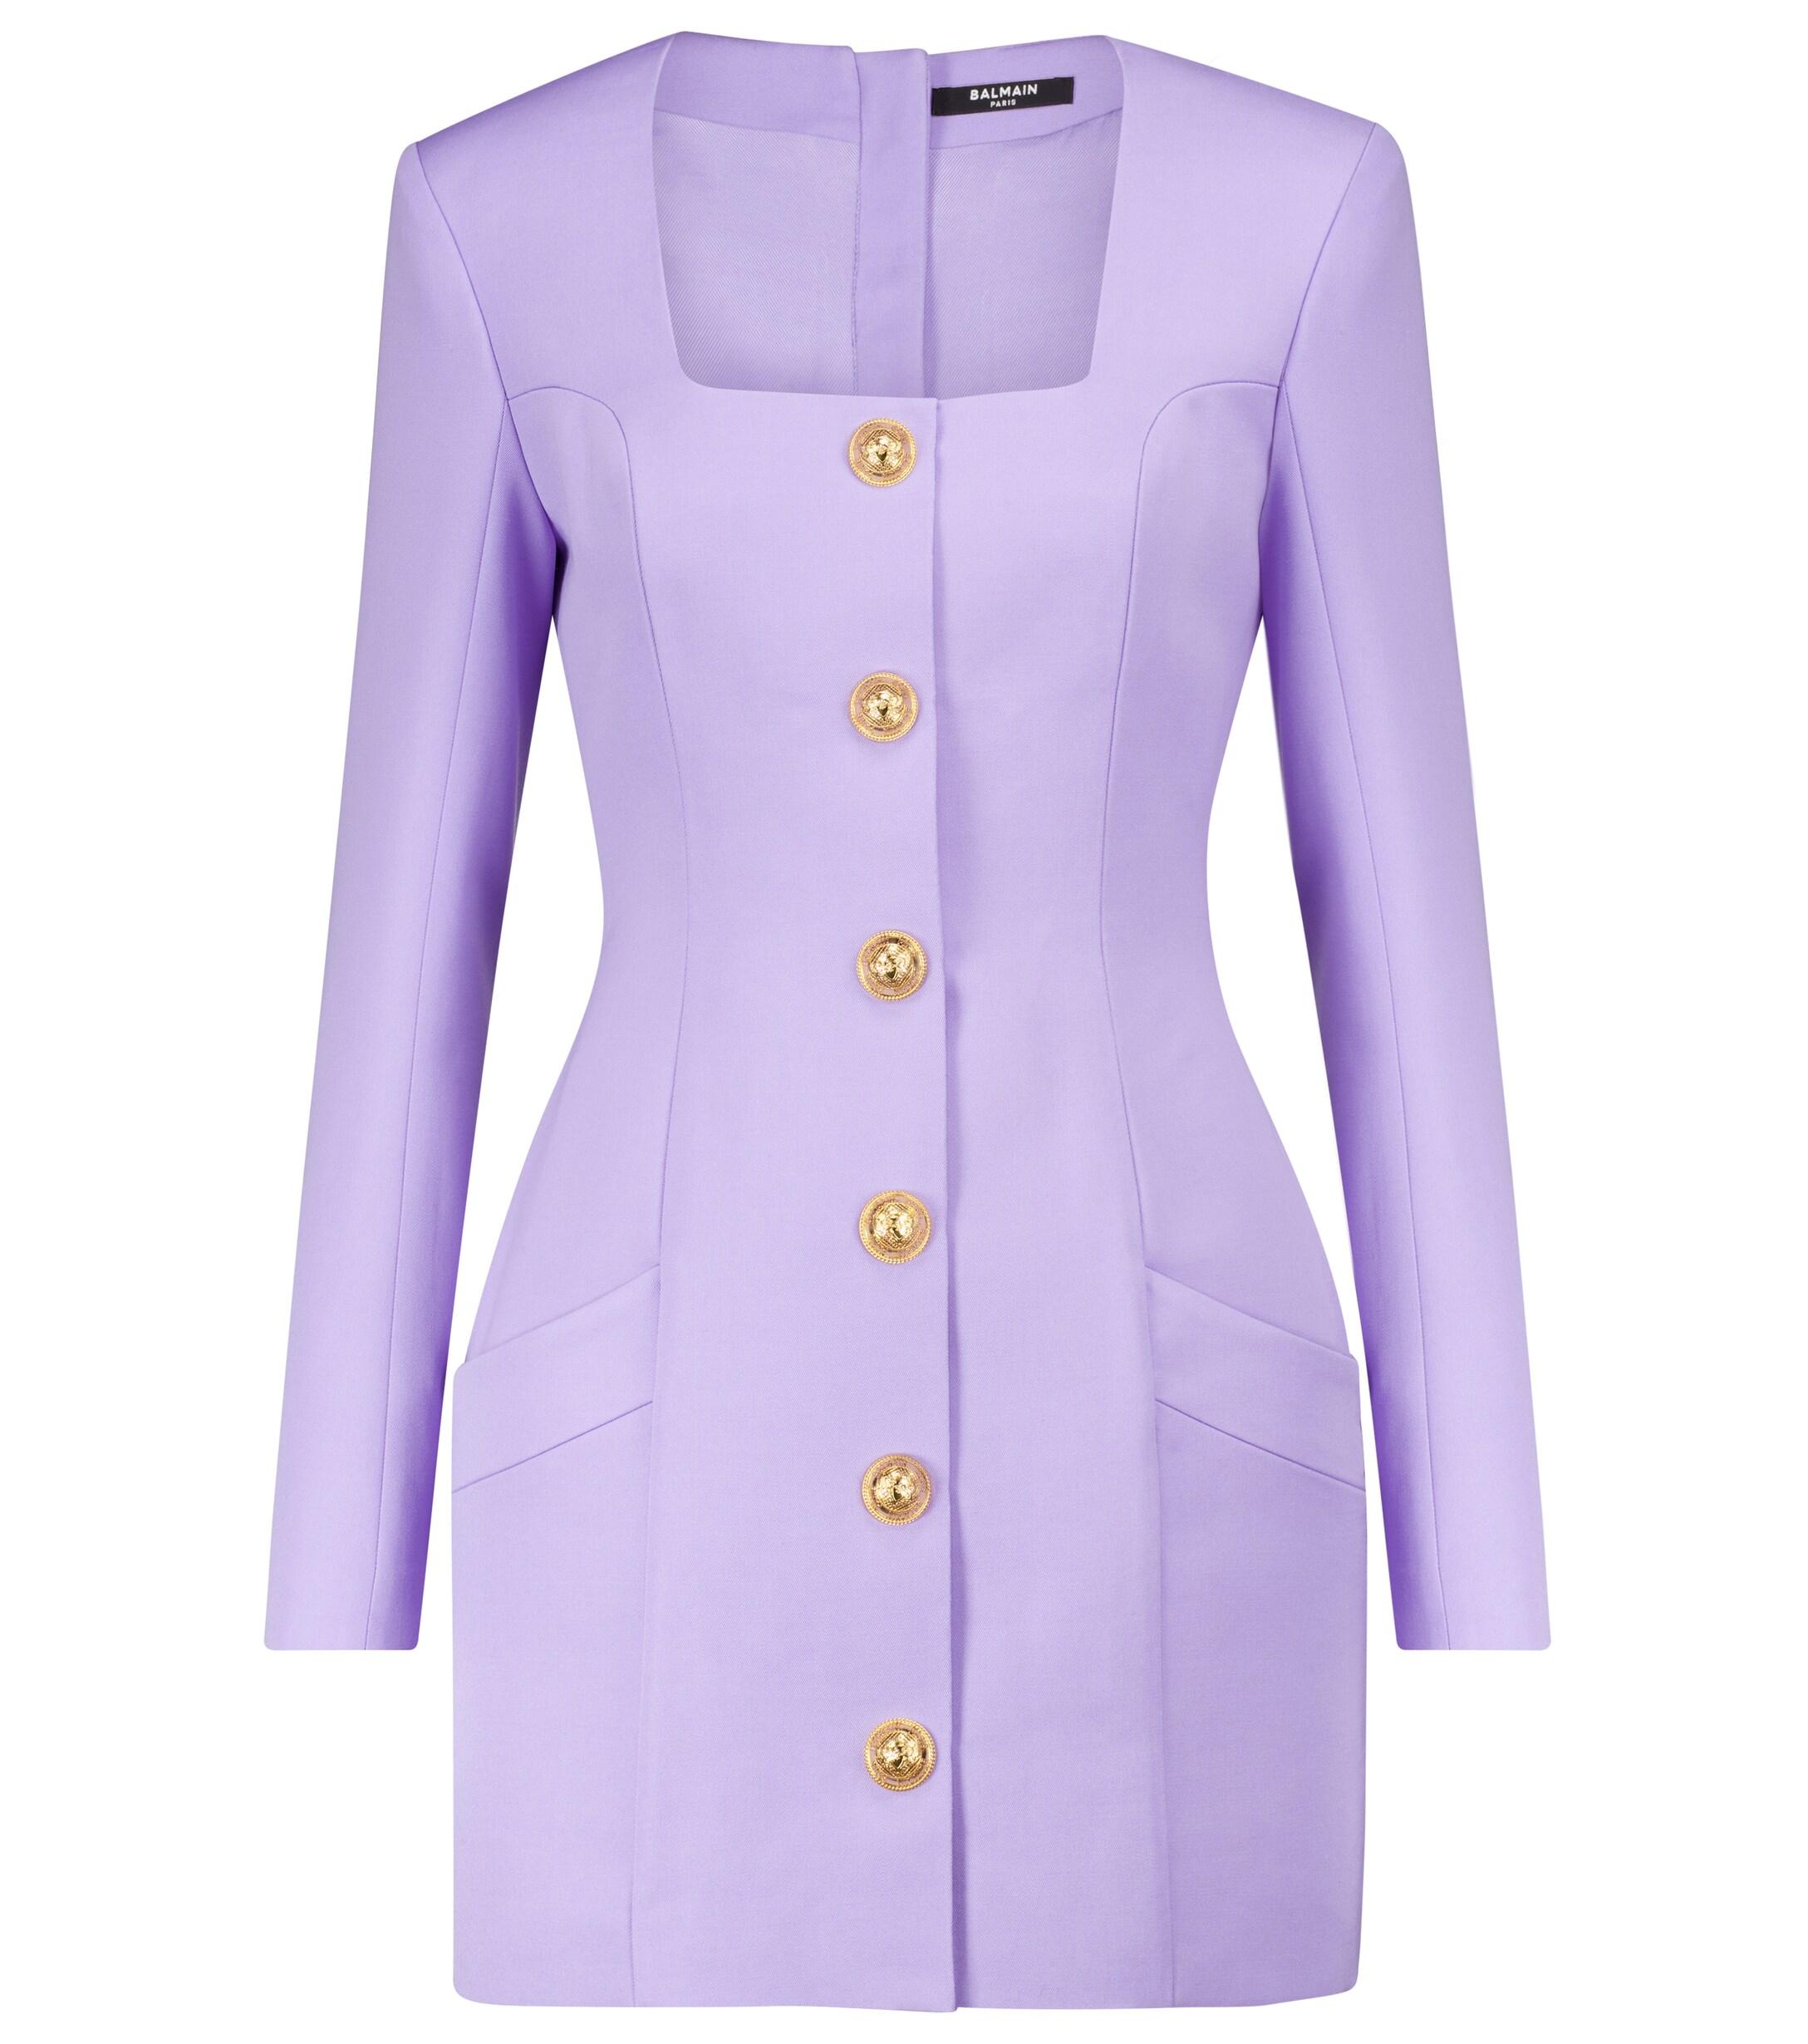 Balmain Wool Minidress in Purple - Lyst